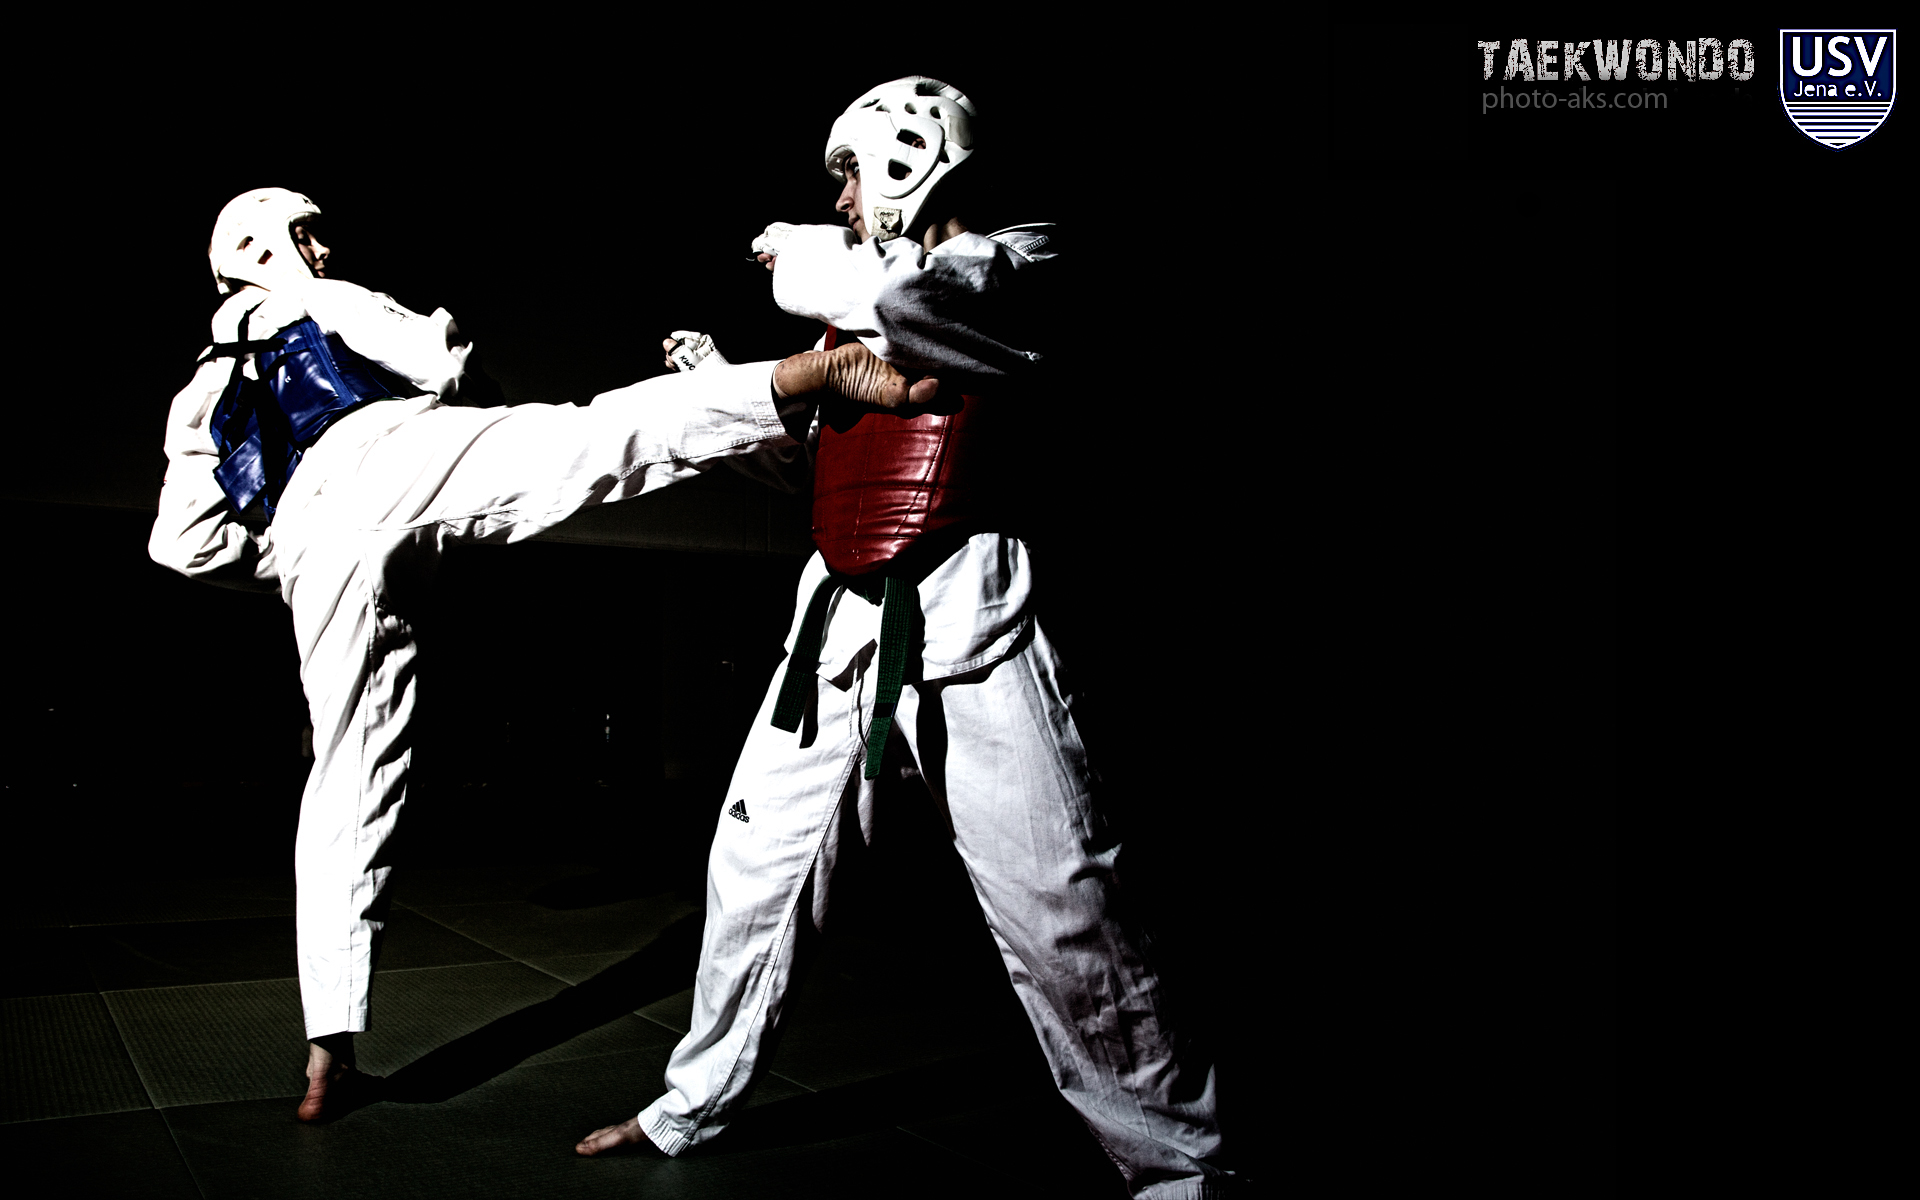 http://pic.photo-aks.com/photo/sports/combat/large/taekawando-taekwondo.jpg